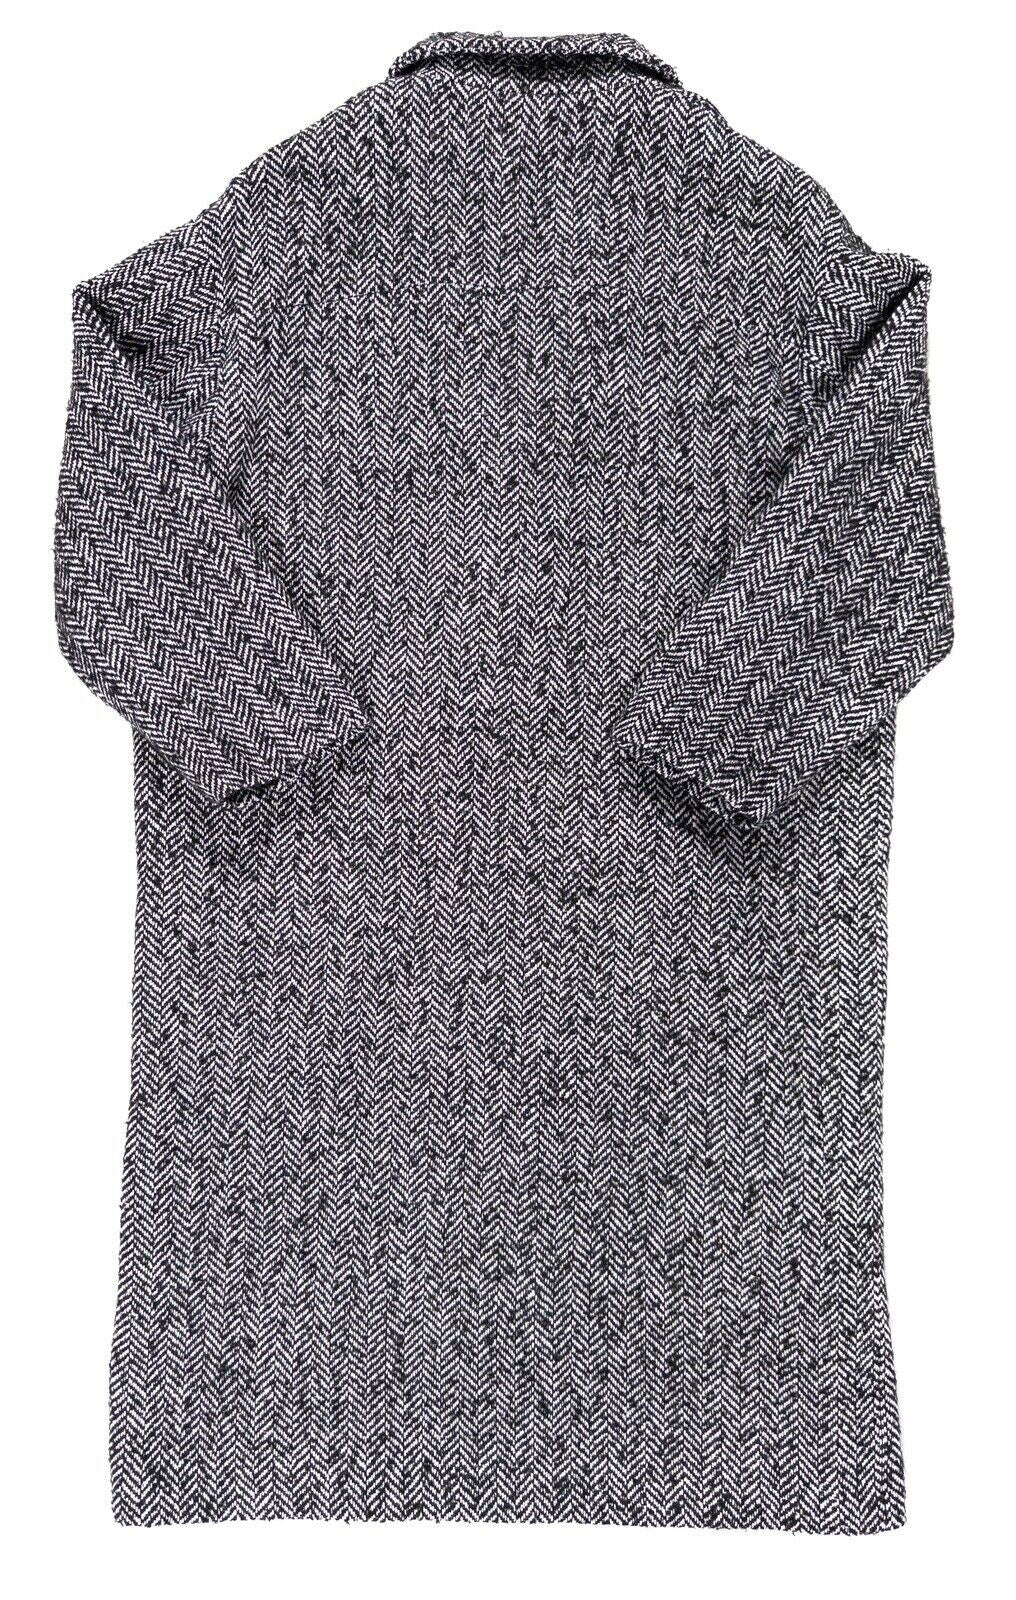 PALTO ITALIA Women's Black and White Zig Zag Pattern Wool Coat Size UK 14